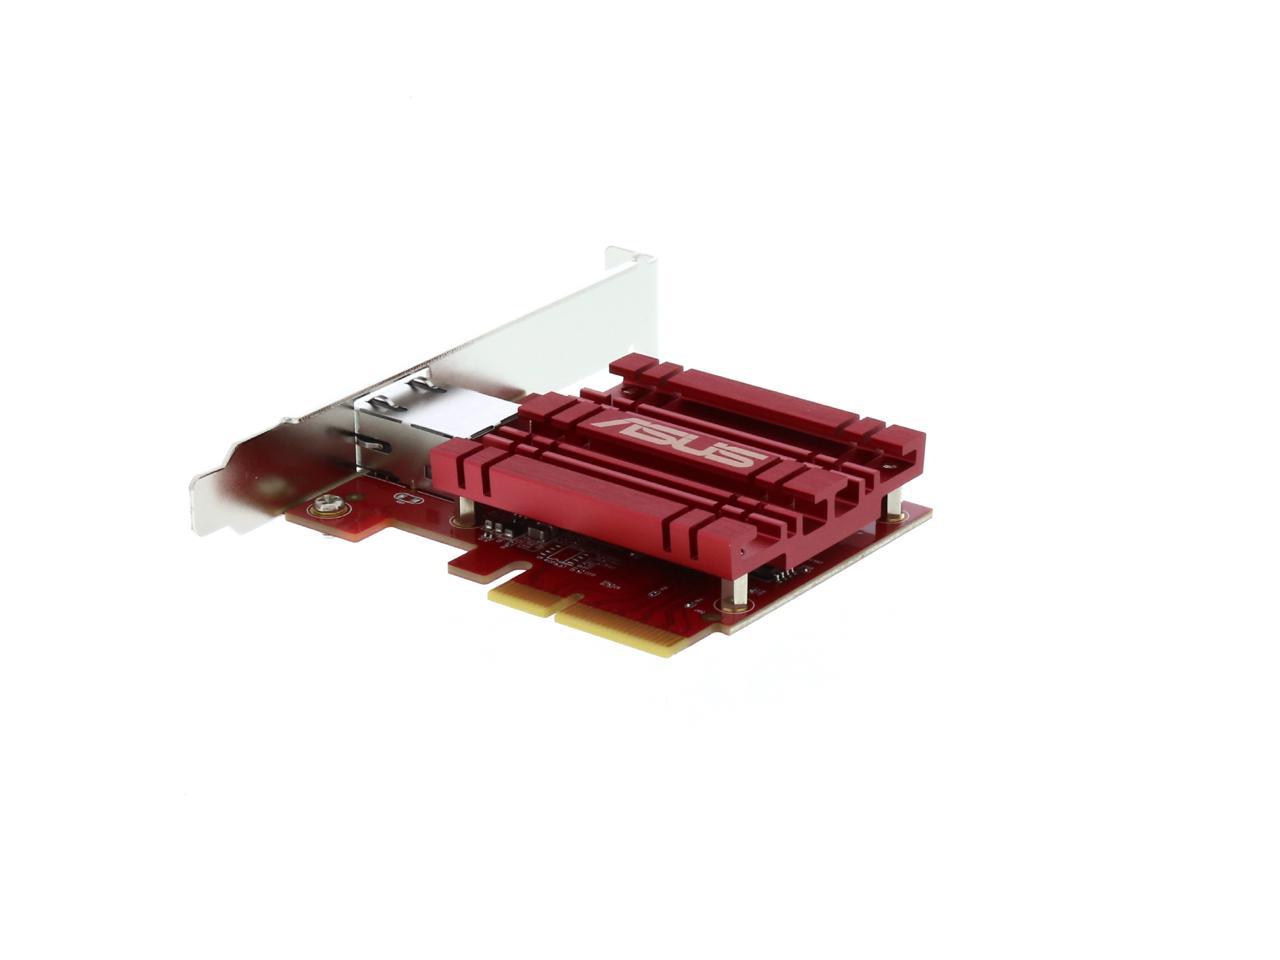 ASUS XG-C100C 10G Network Adapter PCI-E x4 Card - Newegg.com